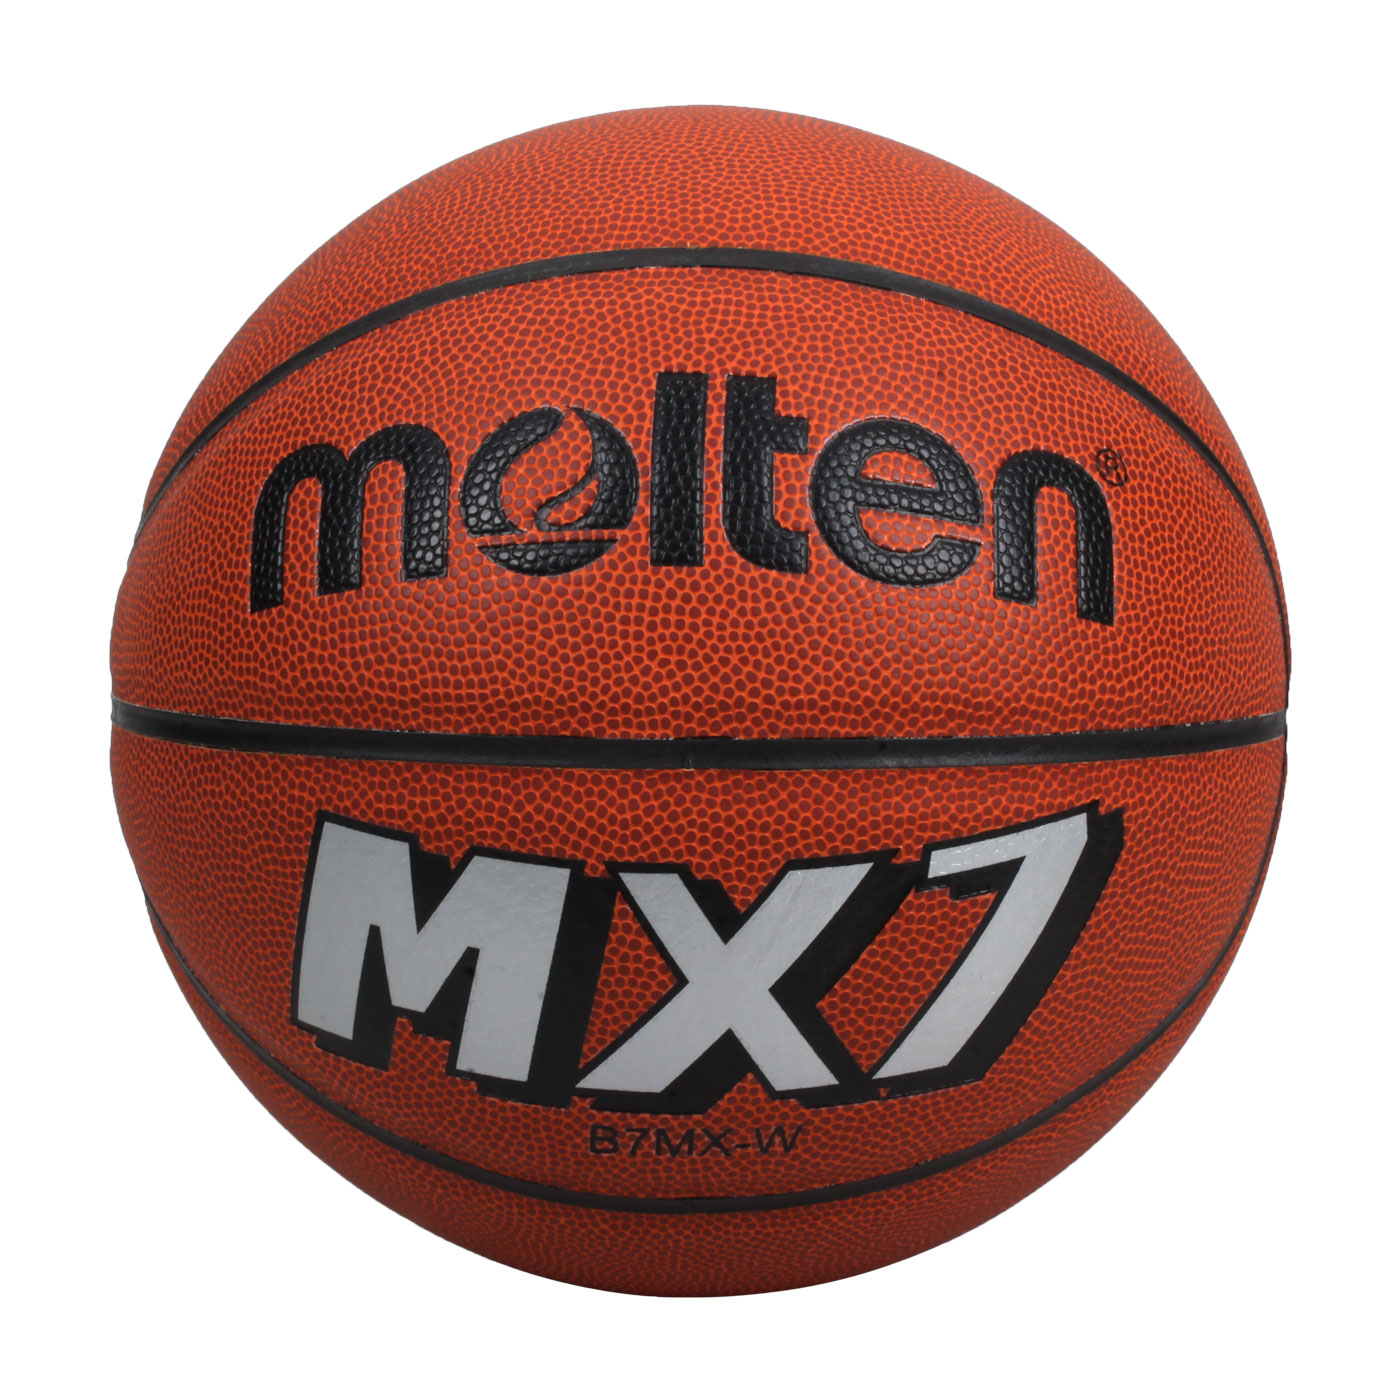 Molten 8片貼合成皮籃球(平溝) B7MX-W